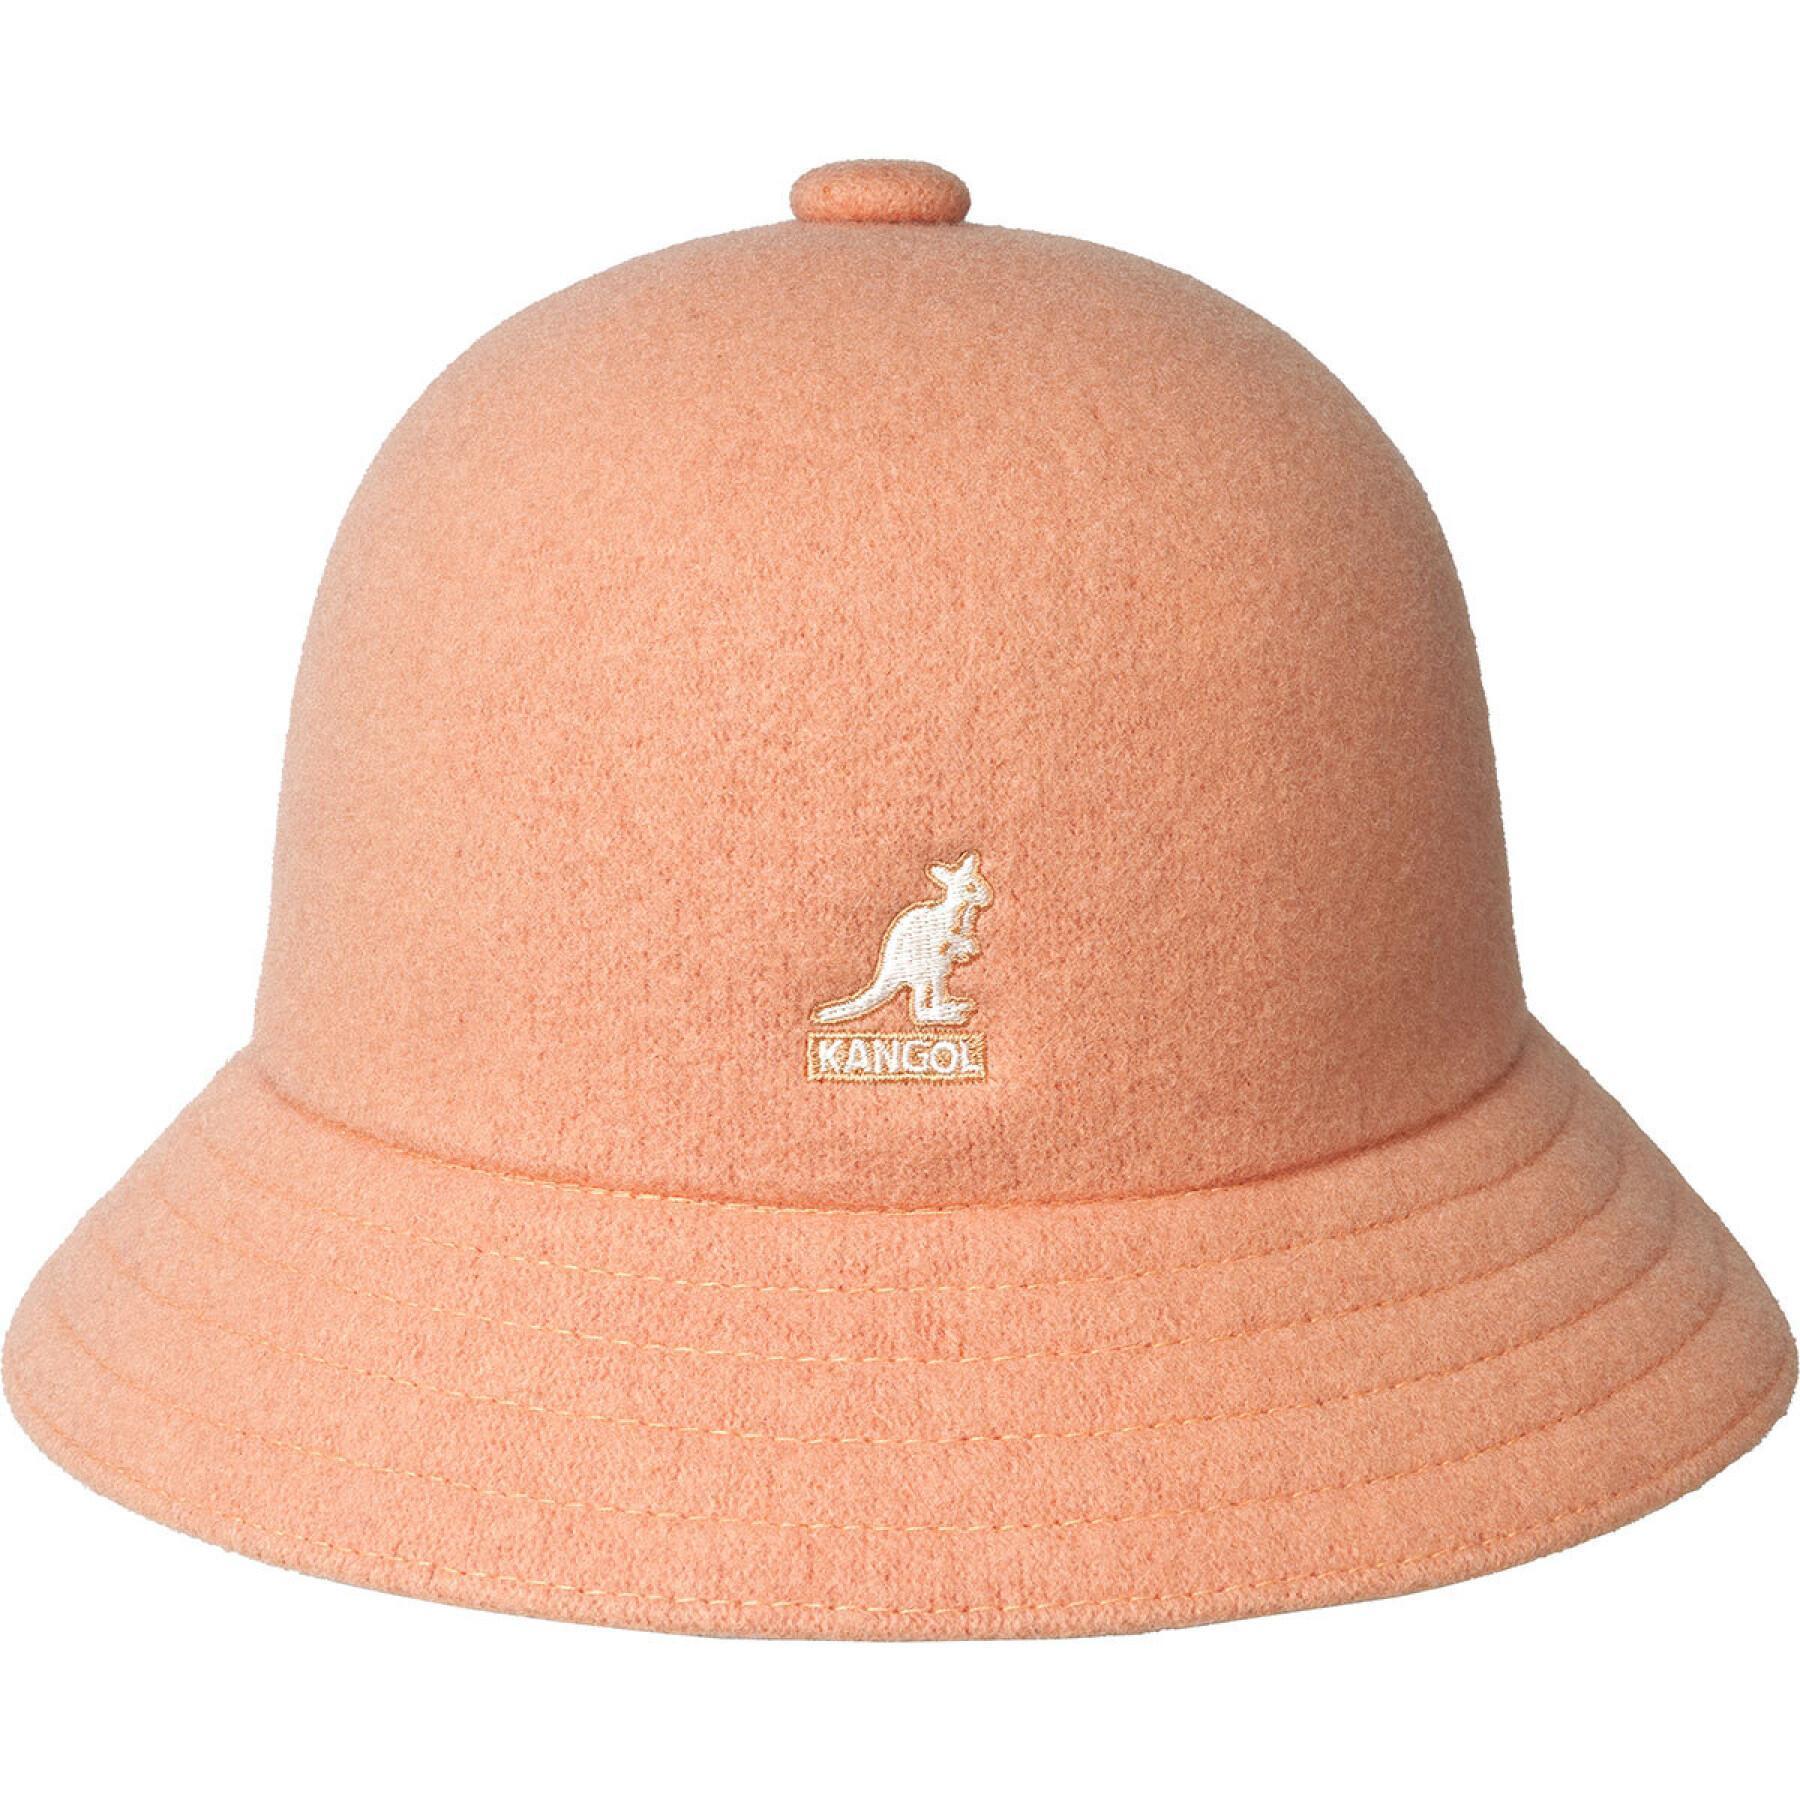 Kangol wool casual bucket hat